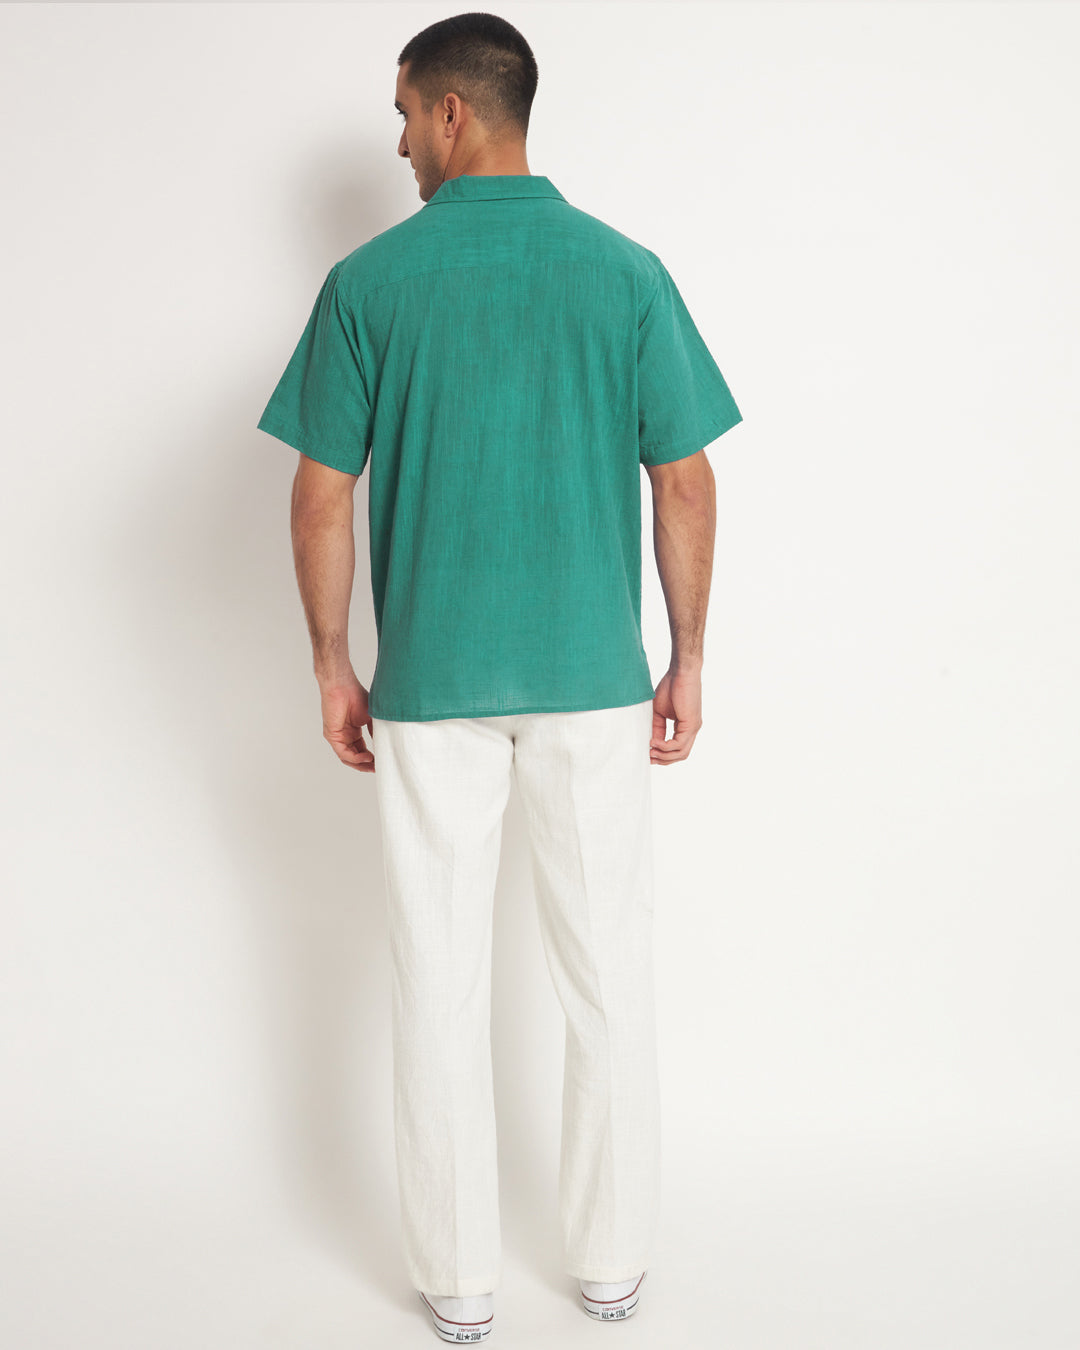 Combo: Classic Valley Vista Half Sleeves Men's Shirt & Pants